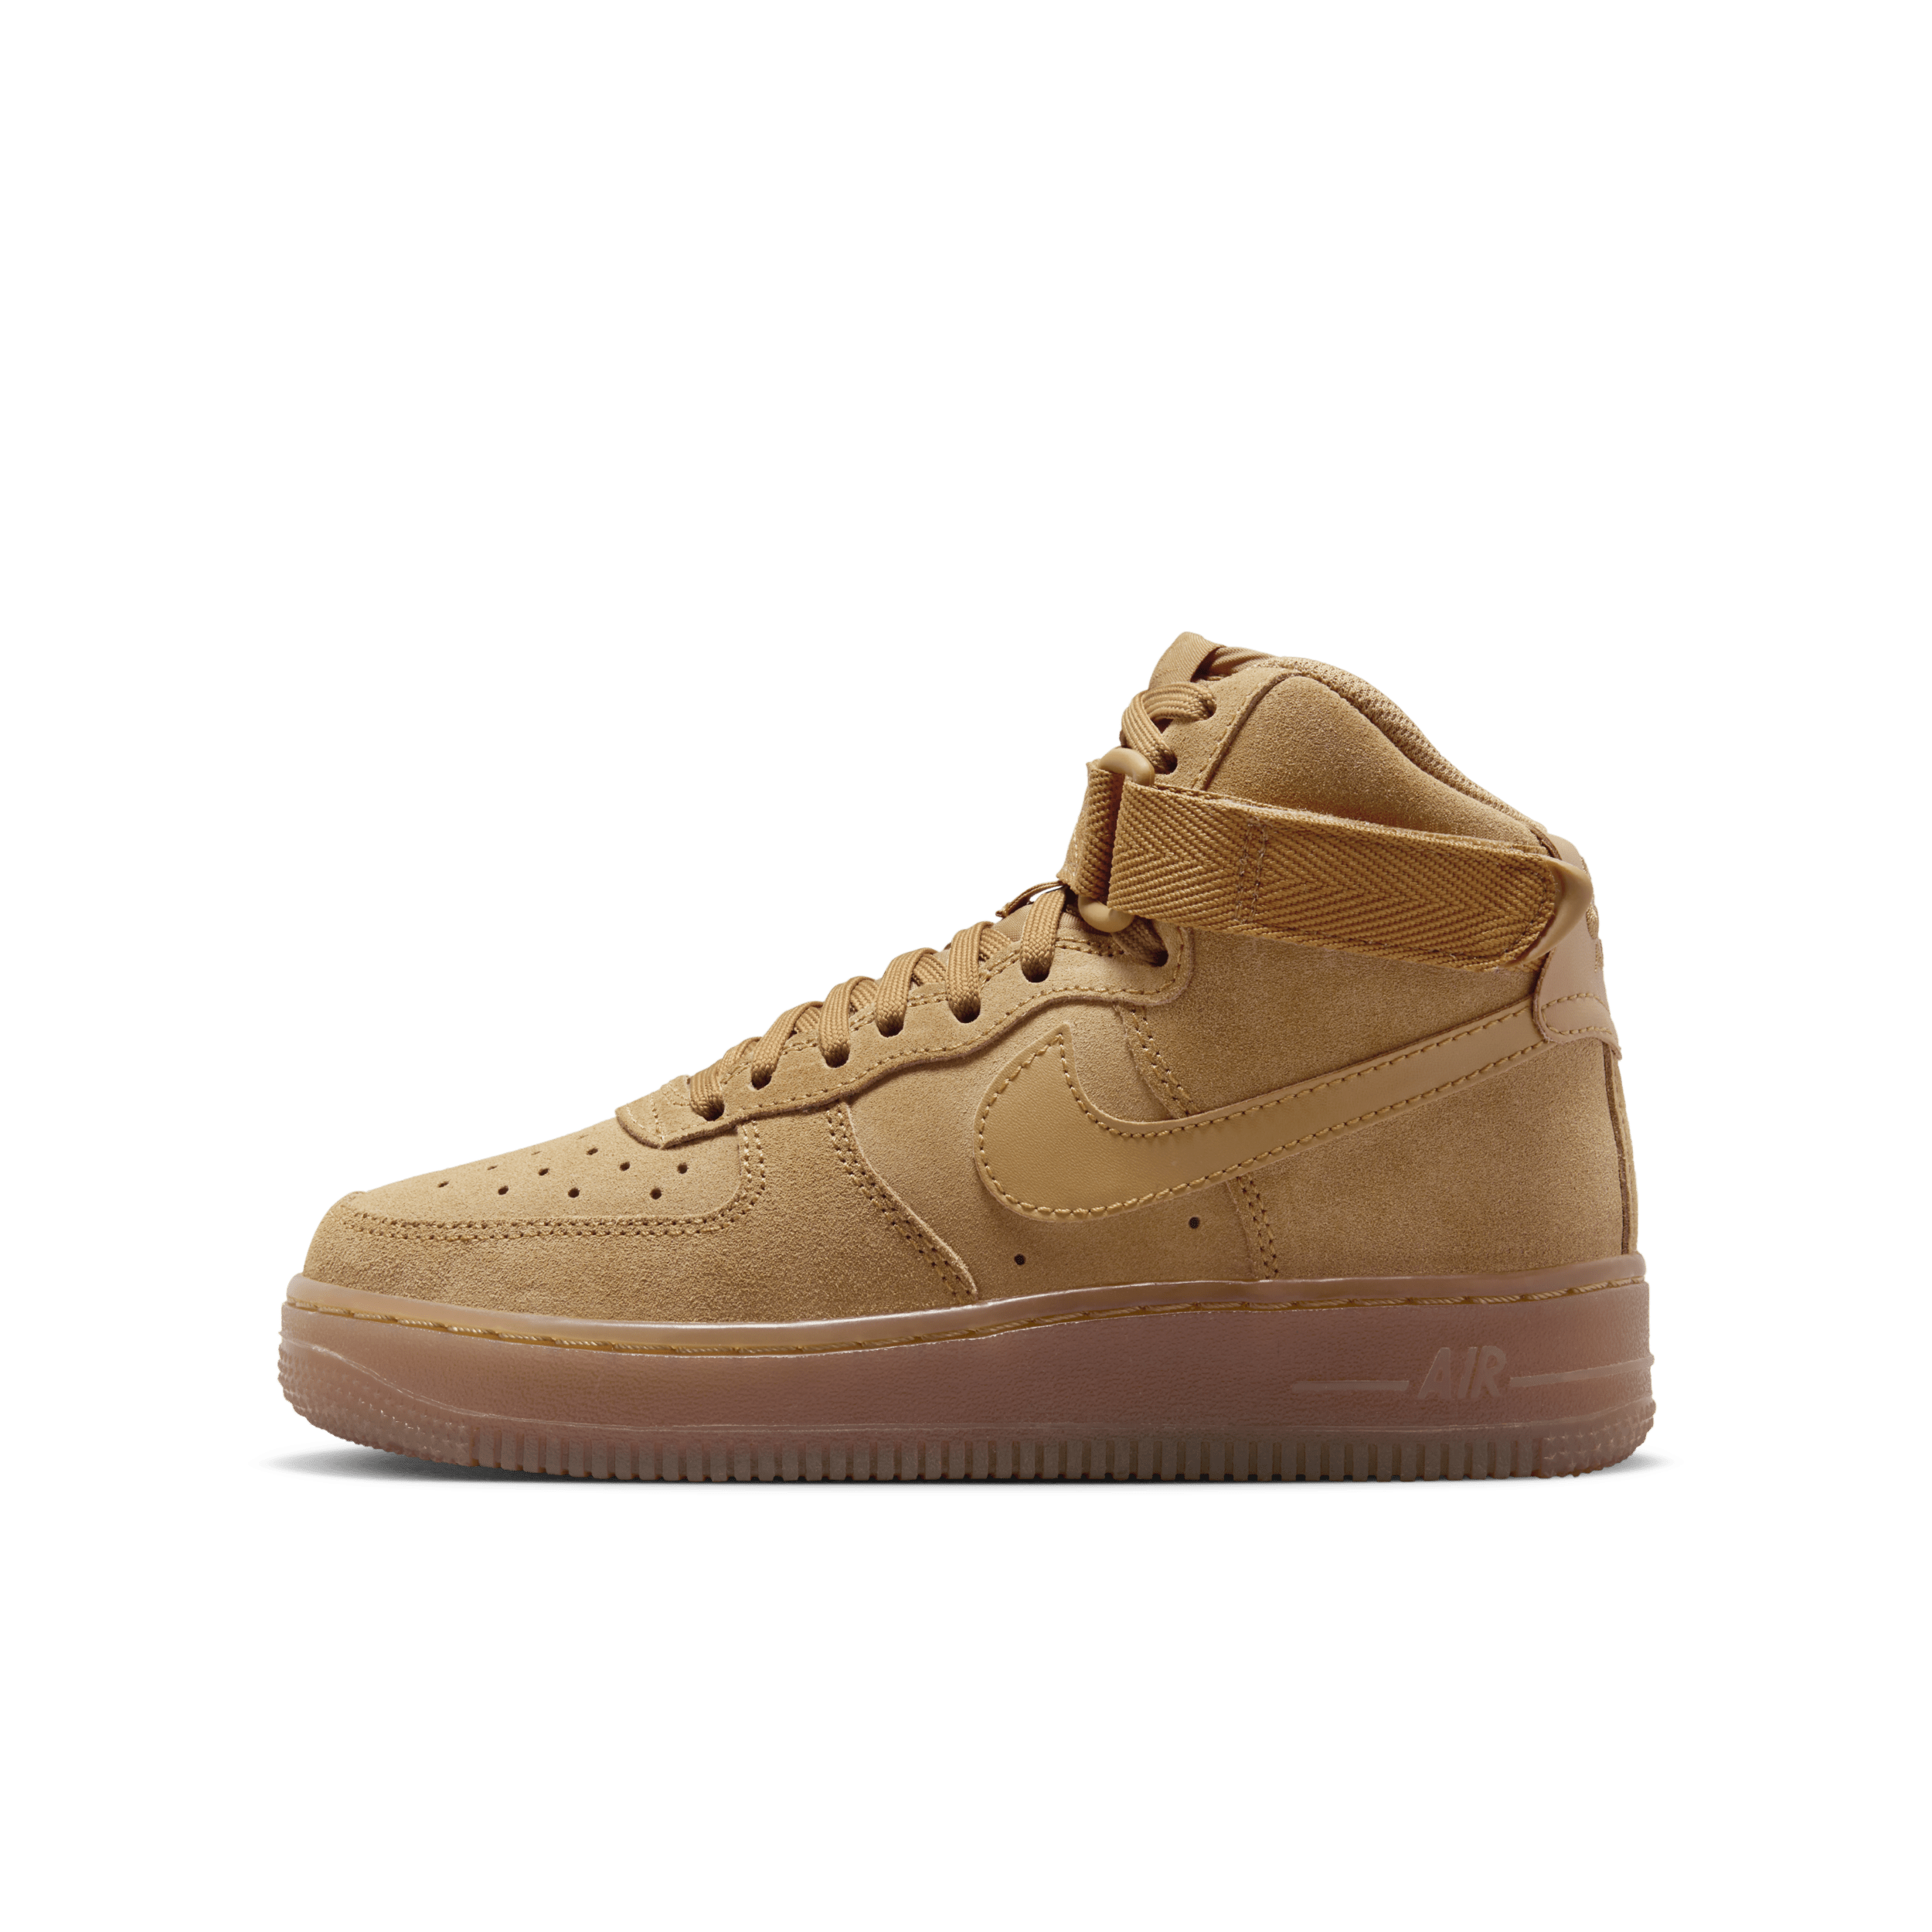 Nike Air Force 1 High LV8 3-sko til større børn - brun